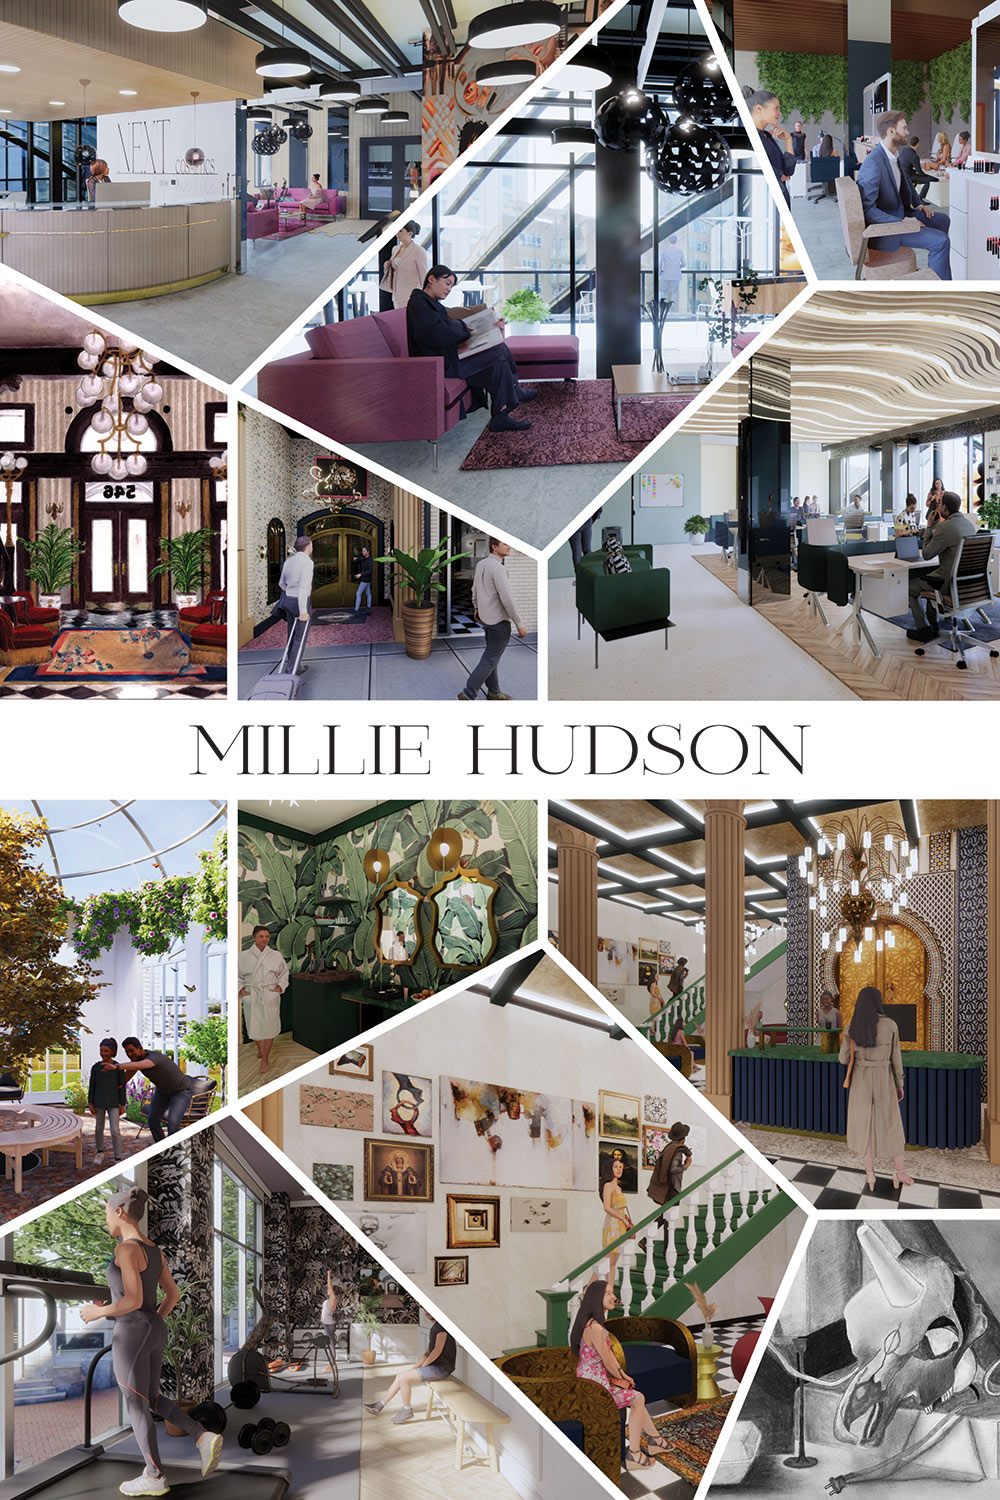 Millie Hudson's interior design senior exhibit board